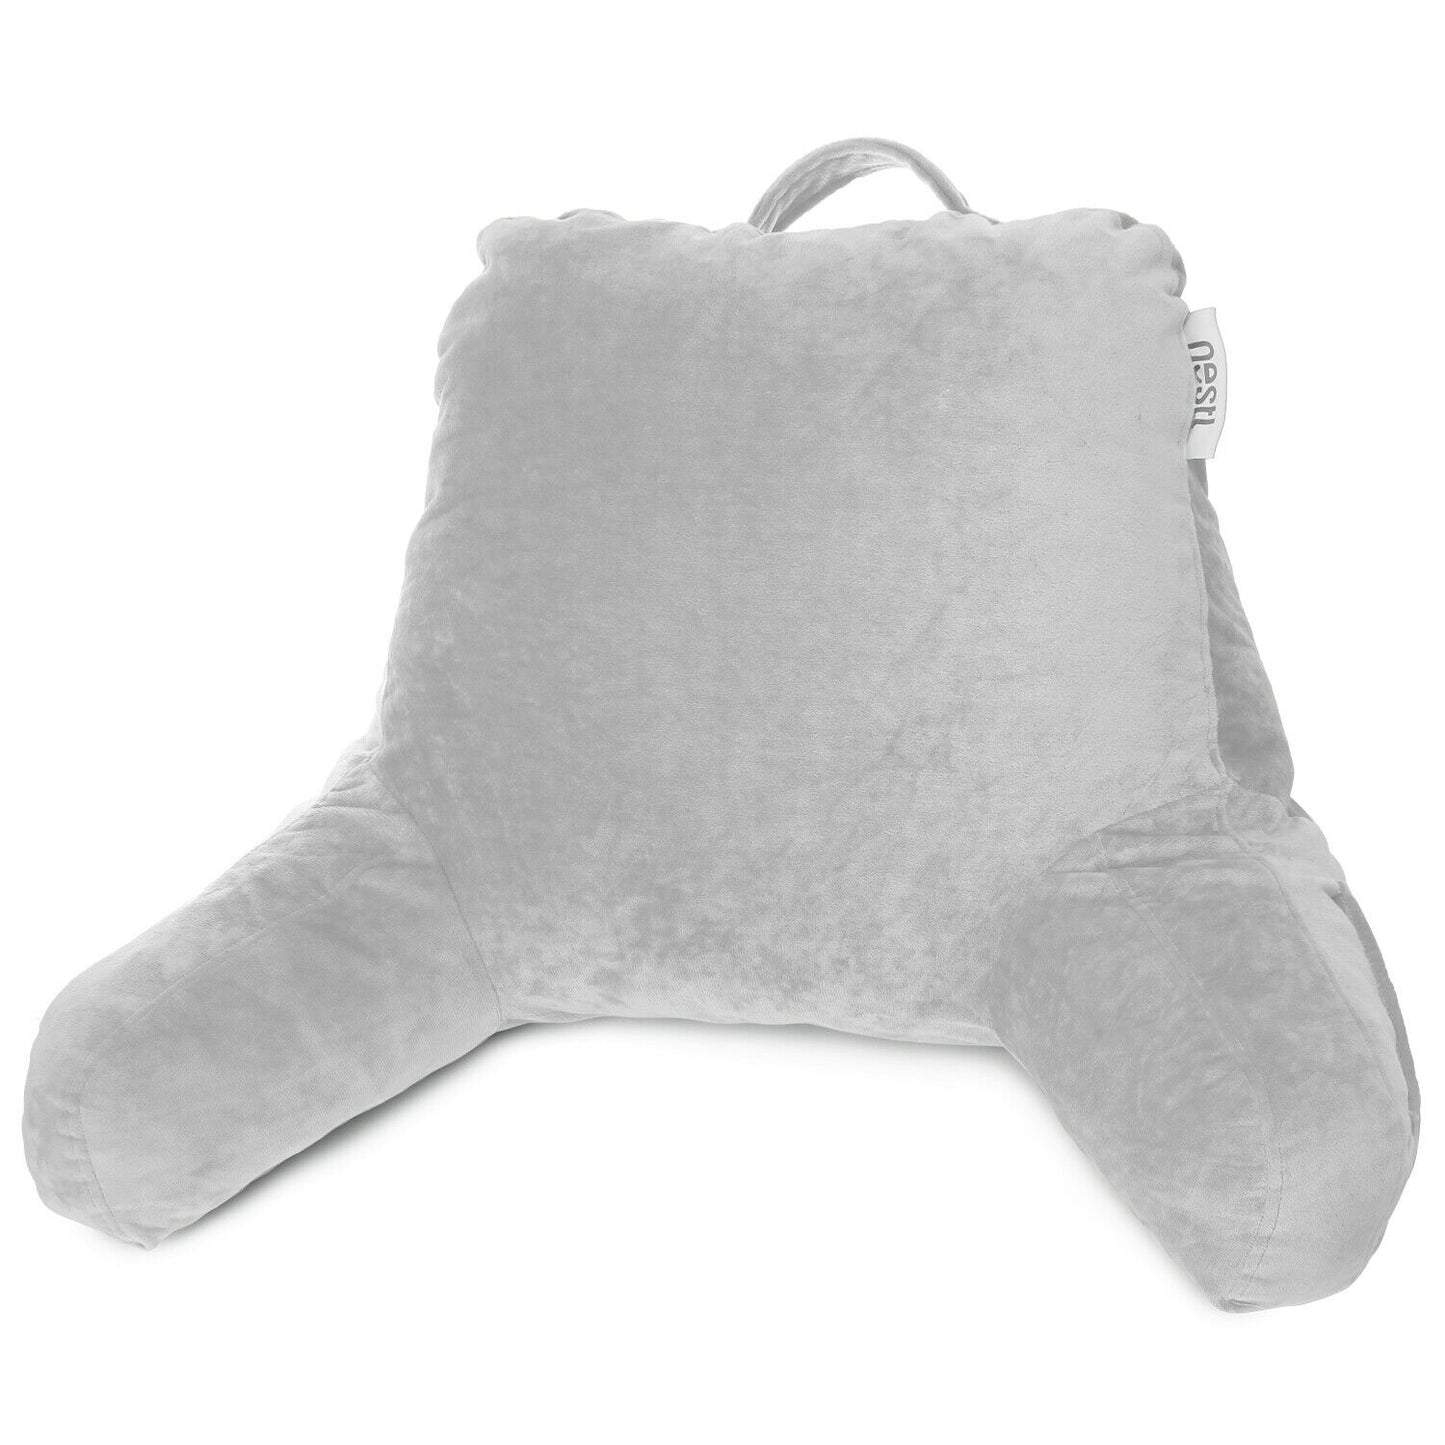 Pillows - TV & Reading Pillow - Kid's Memory Foam Bedrest Back Pillow 12 Colors! - Silver Light Gray